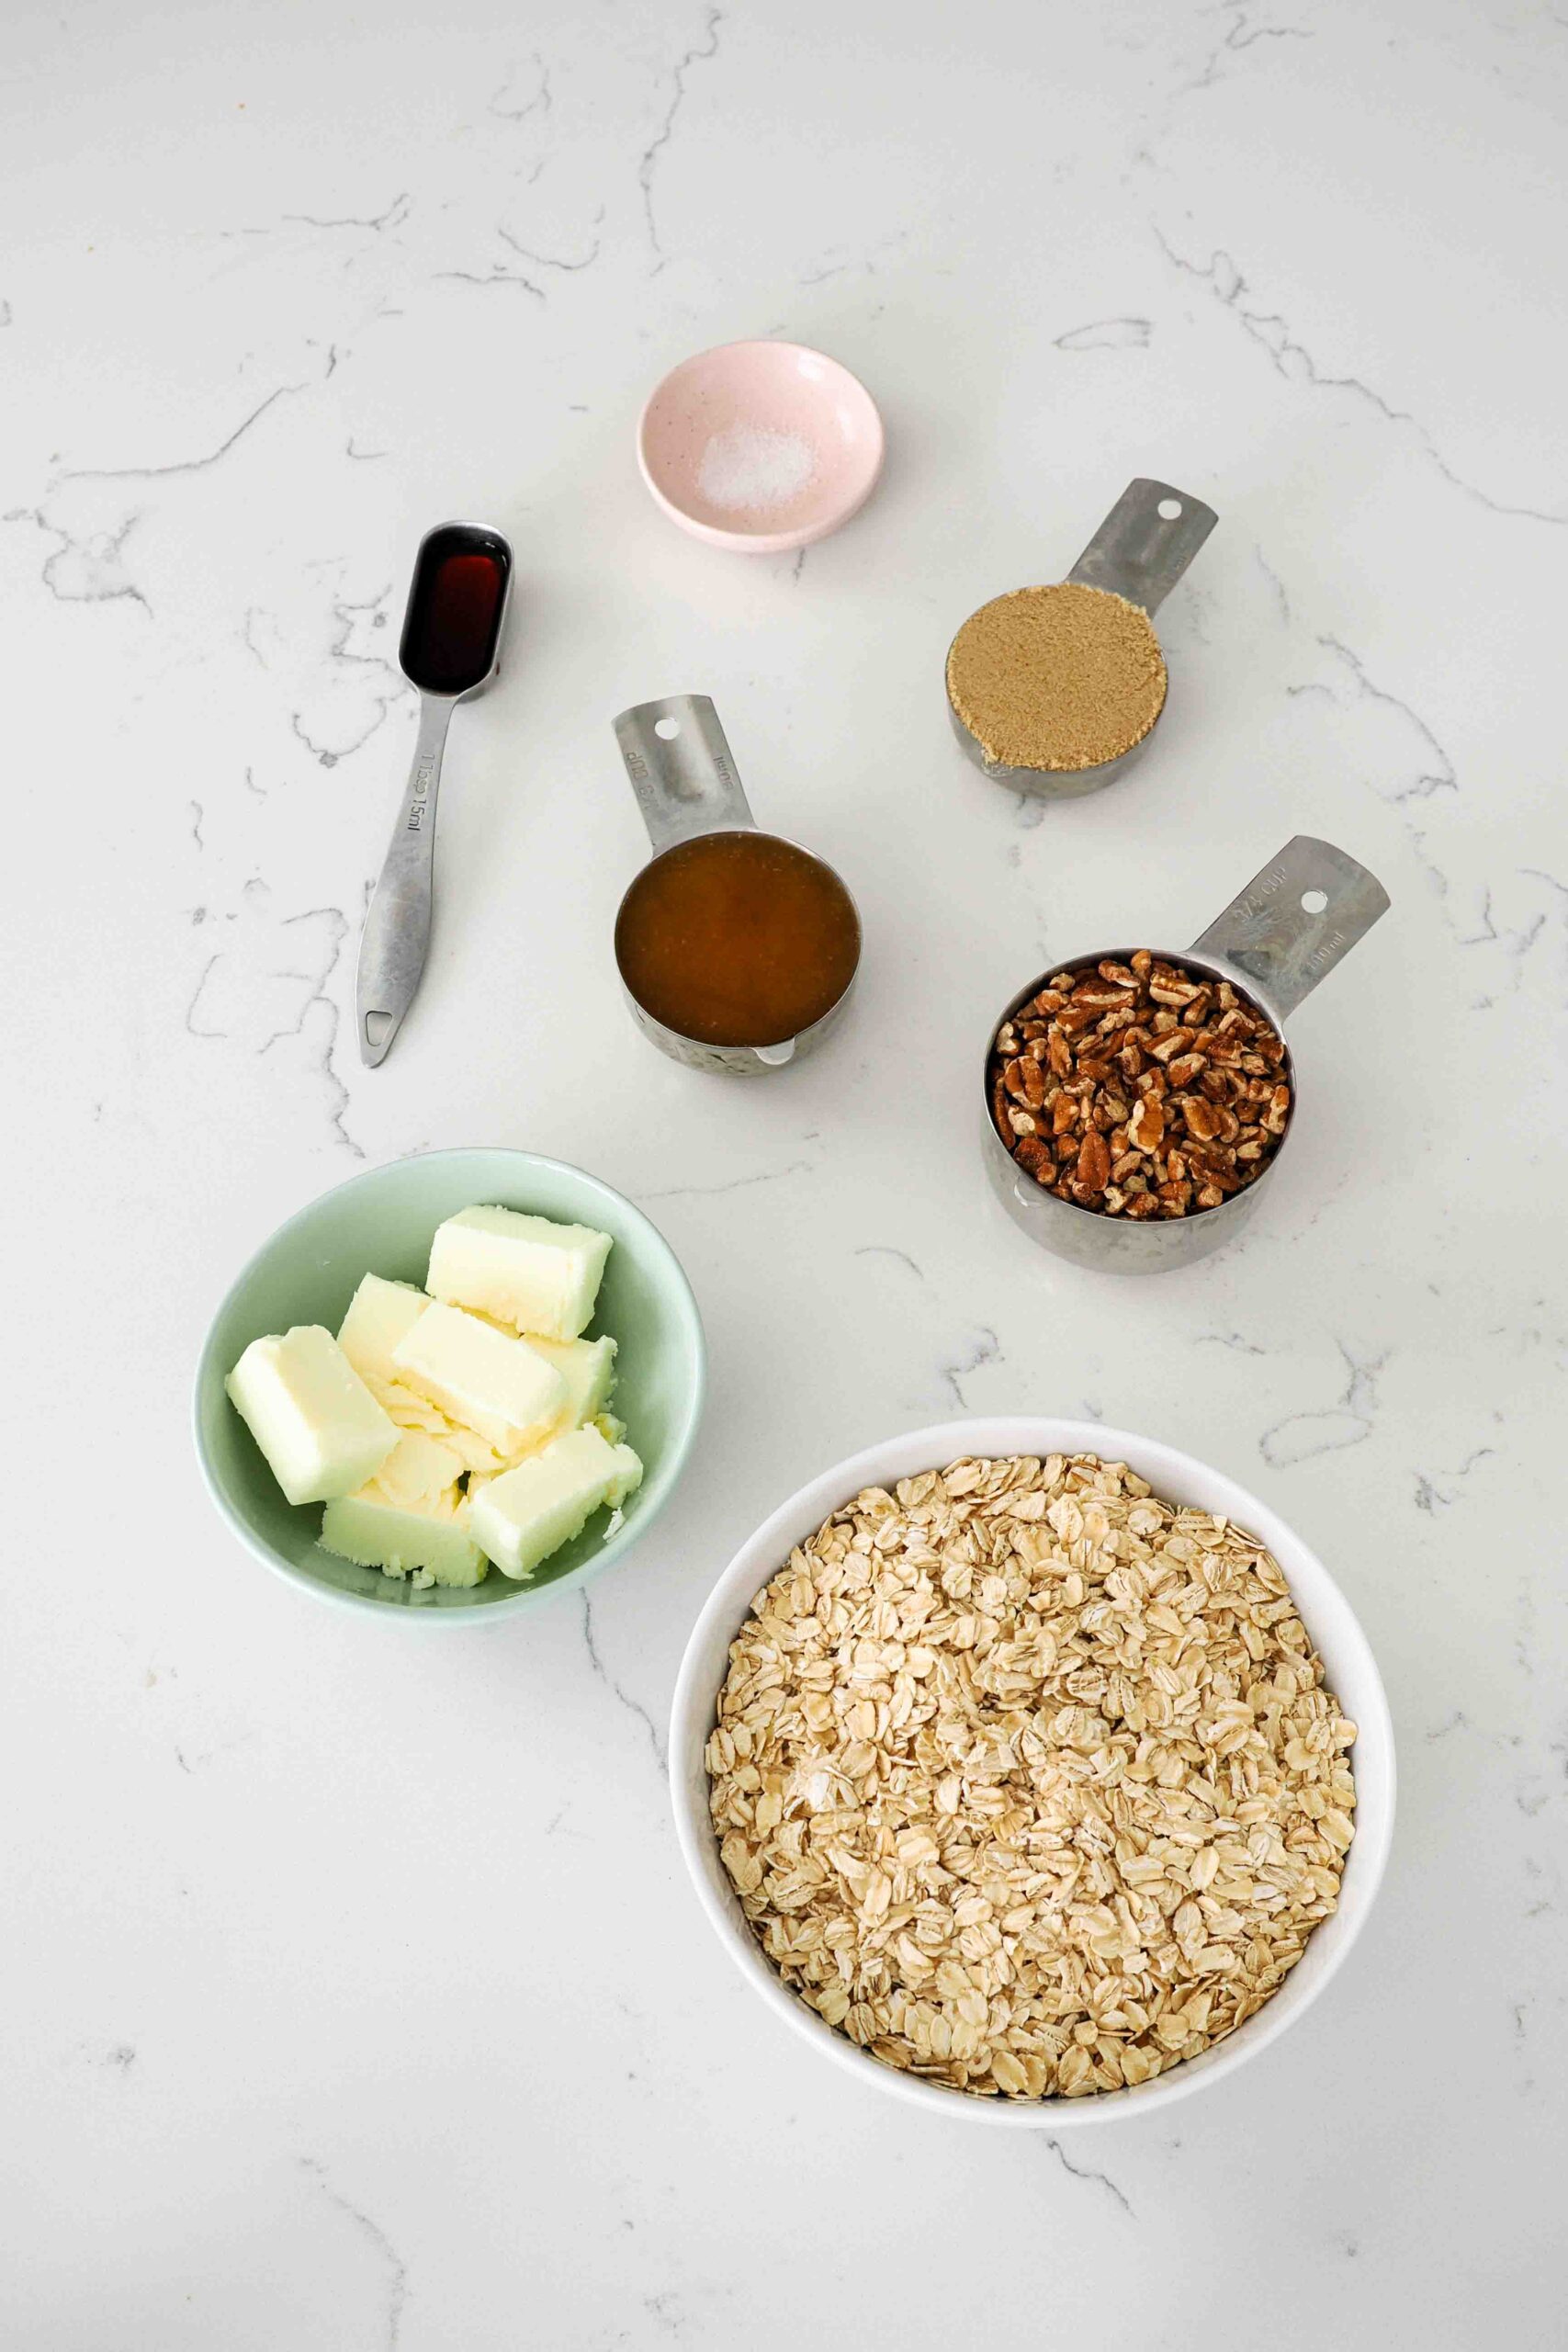 Ingredients for honey pecan granola on a quartz kitchen counter.